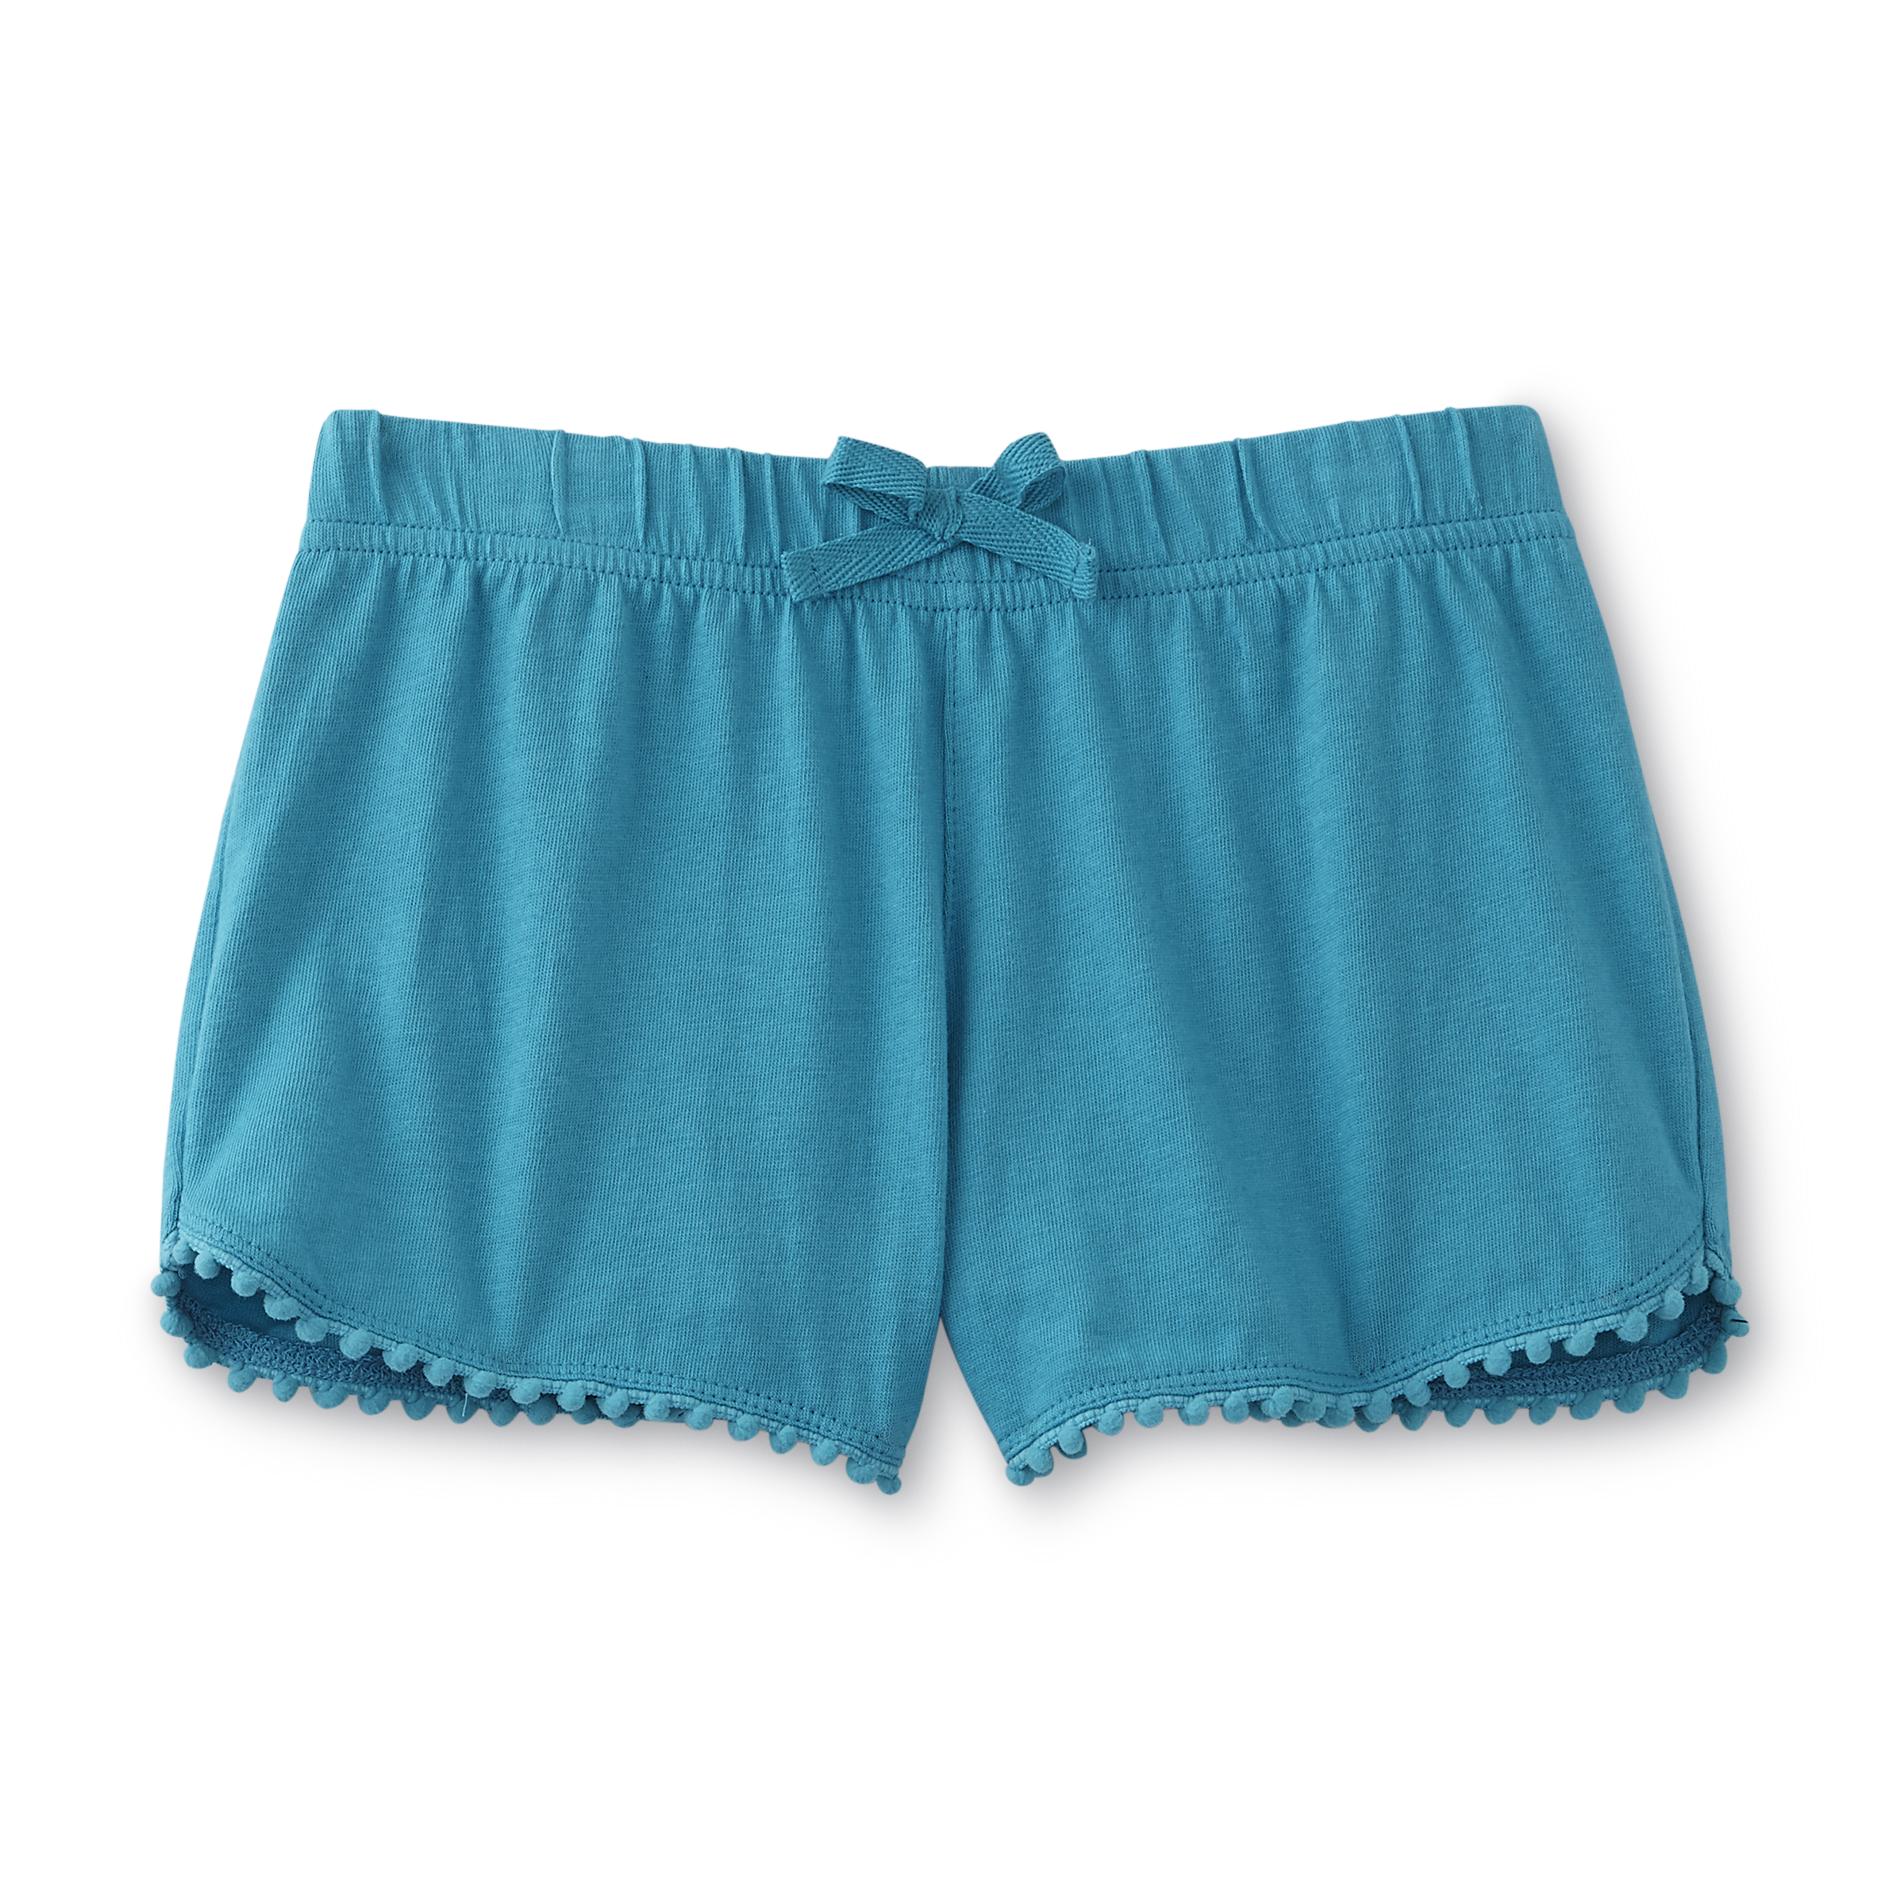 Toughskins Infant & Toddler Girl's Shorts